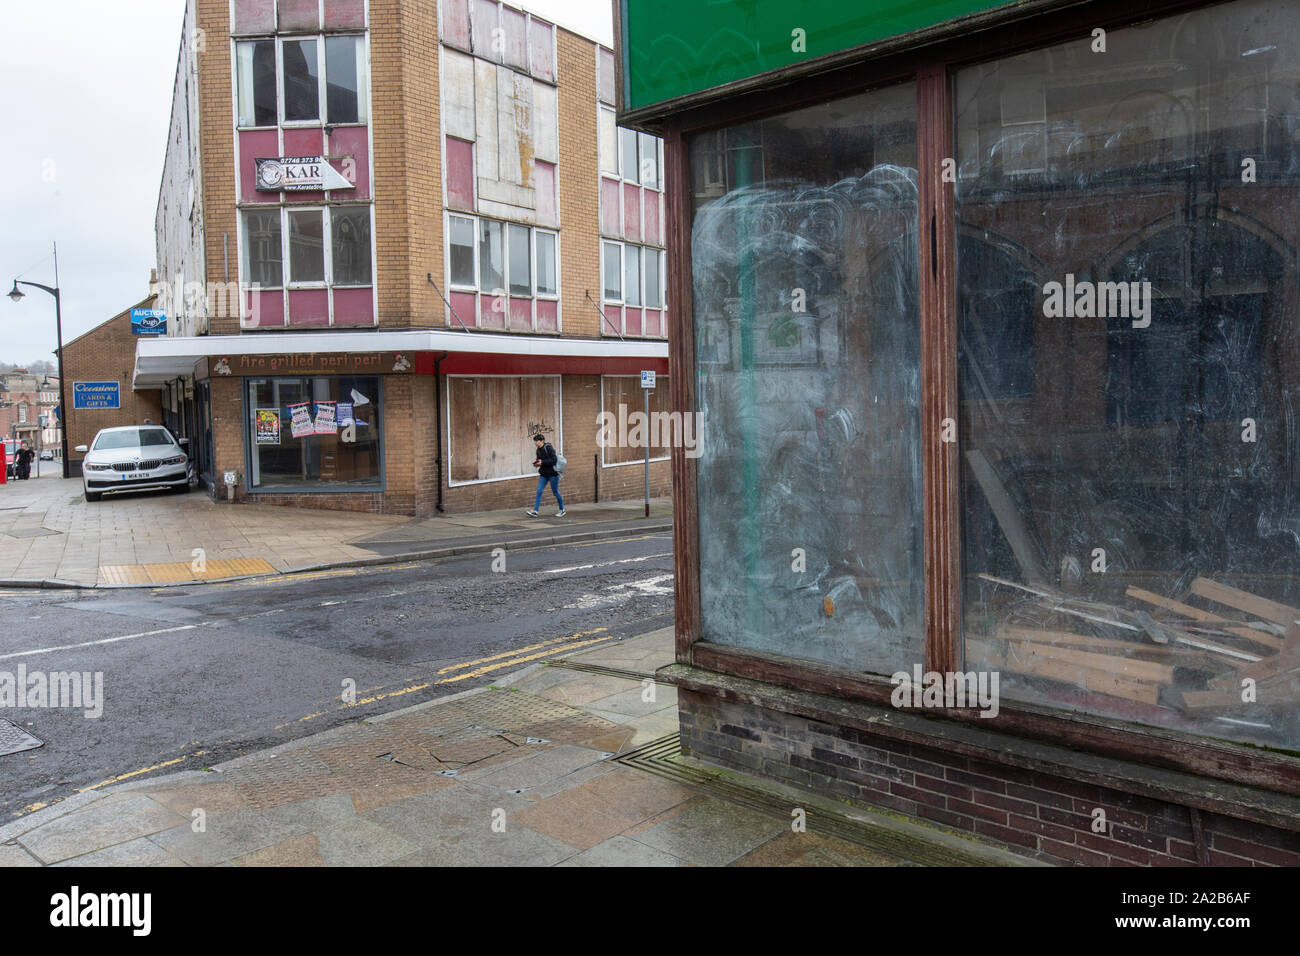 Empty shops and buildings in Burslem, Stoke-on-Trent, UK Stock Photo